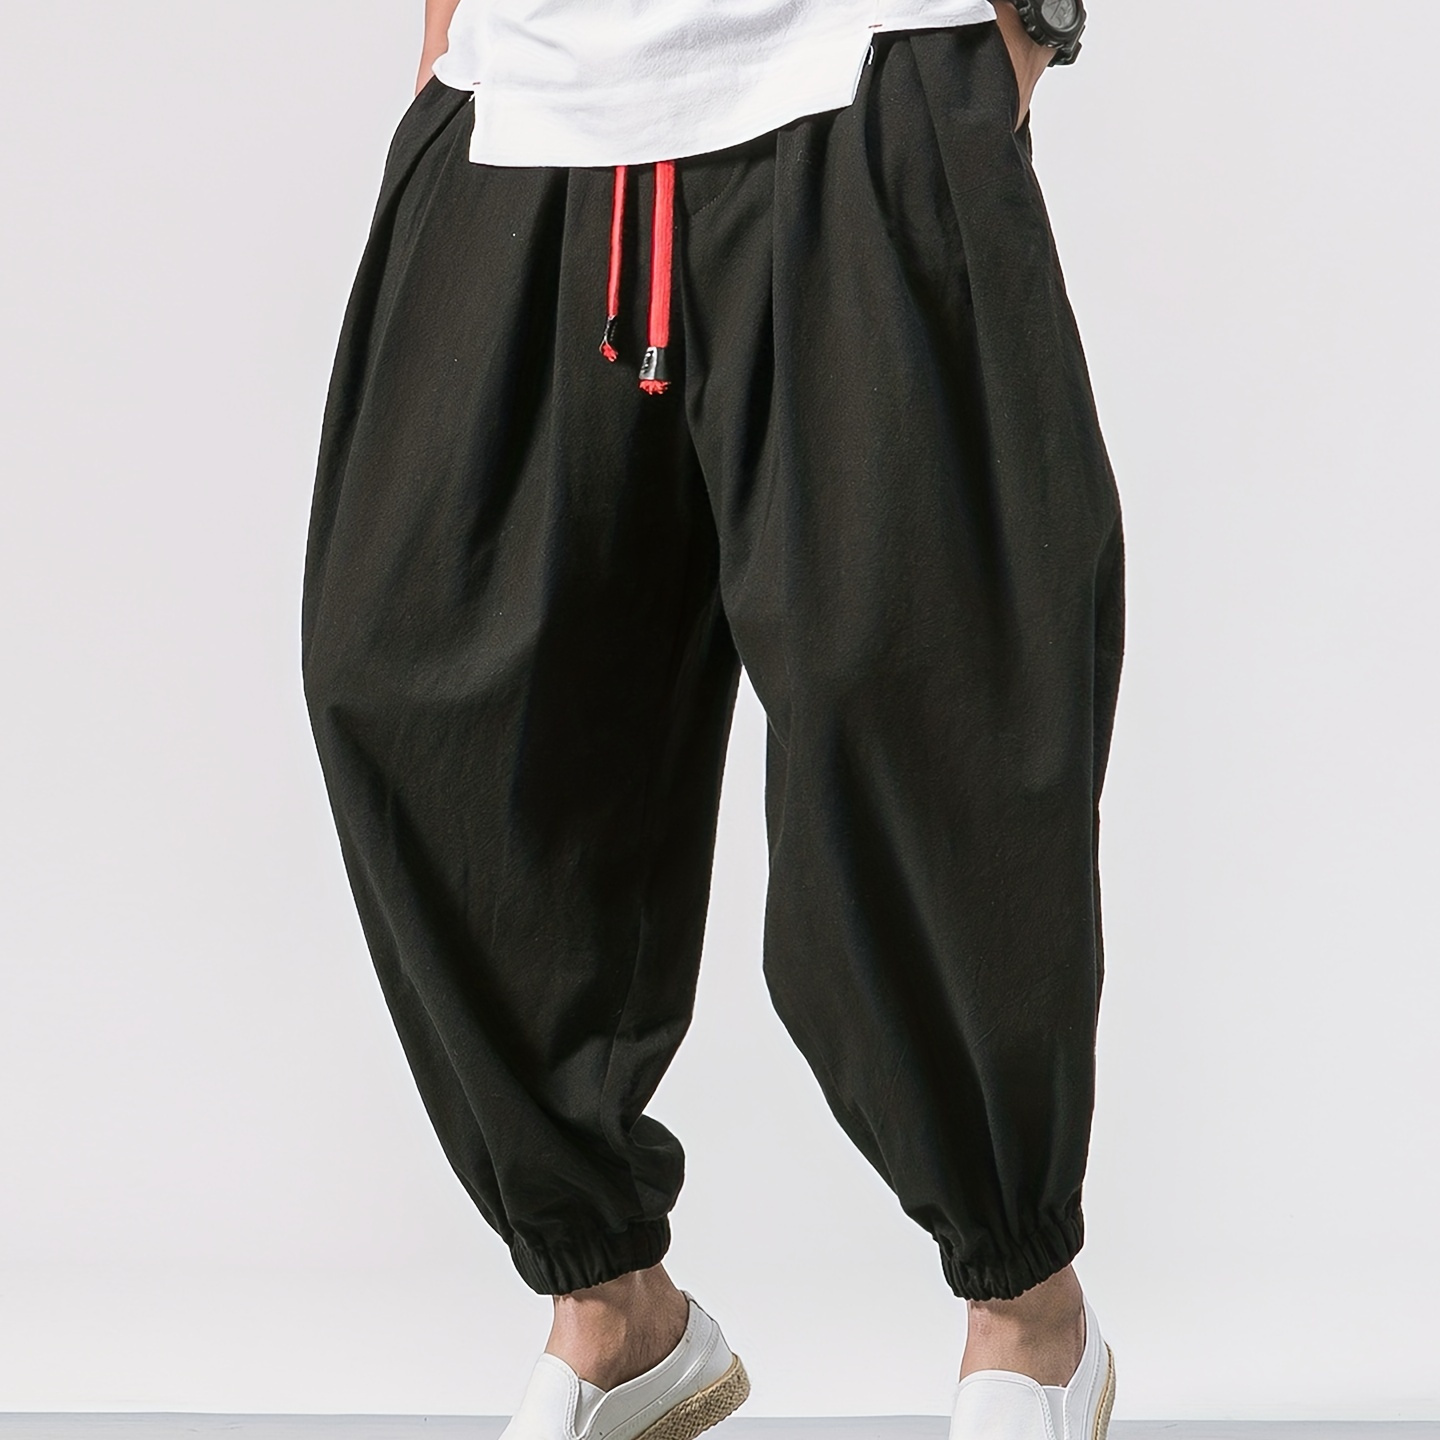 

Men's Stylish Harem Pants, Casual Cotton Drawstring Hip Hop Loose Pants For Outdoor, Men's Clothing